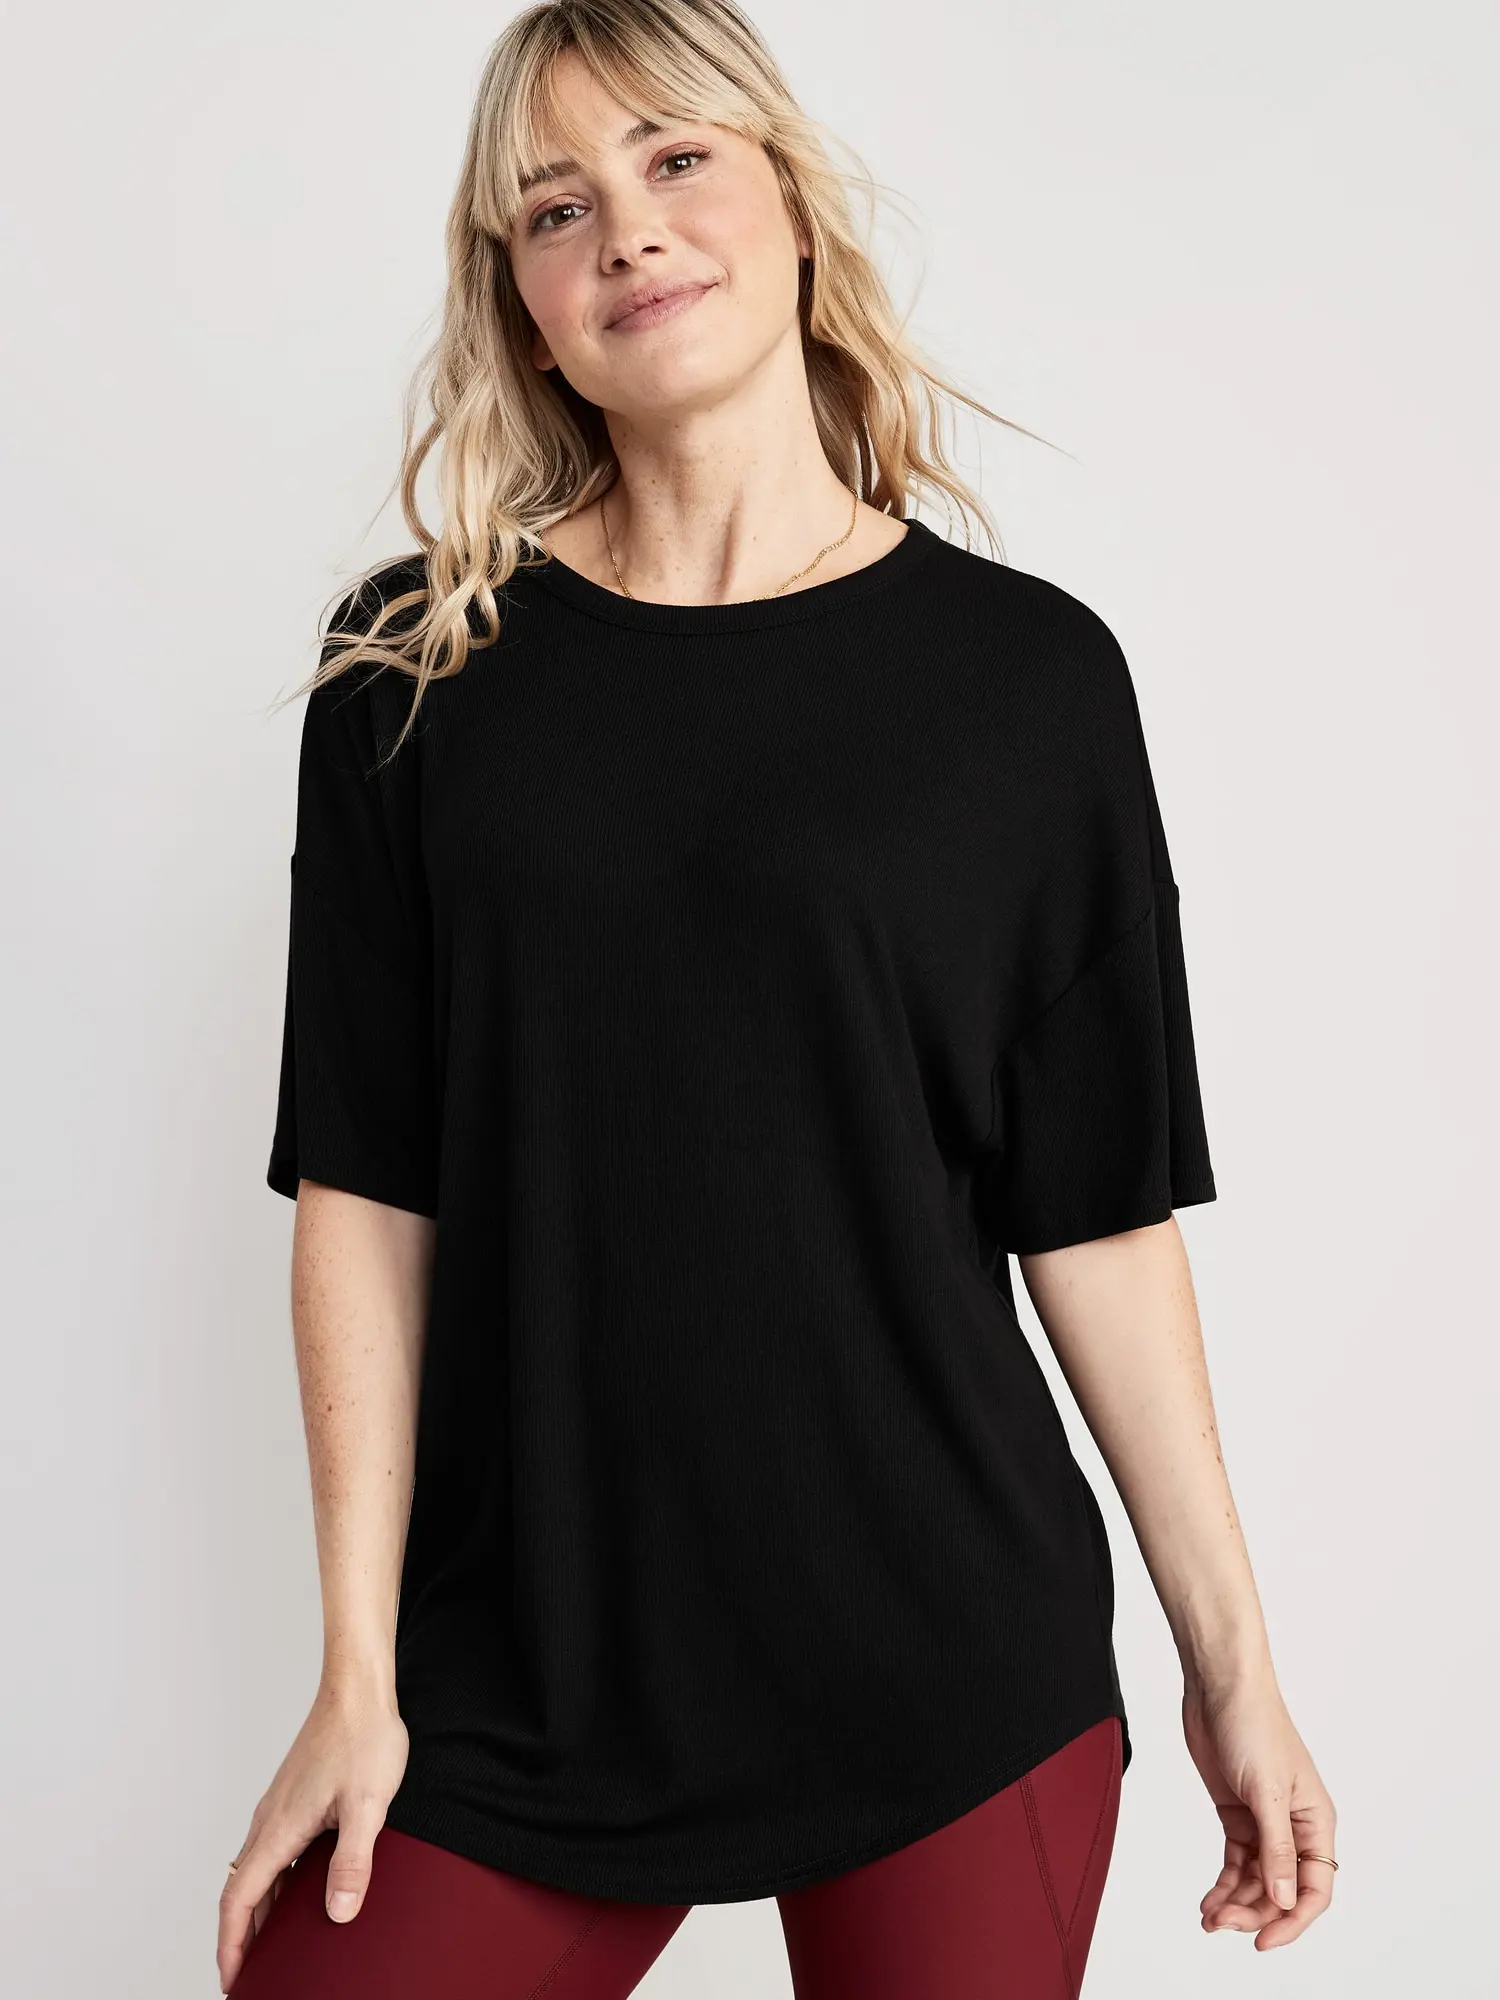 Old Navy UltraLite Rib-Knit Tunic T-Shirt for Women black. 1